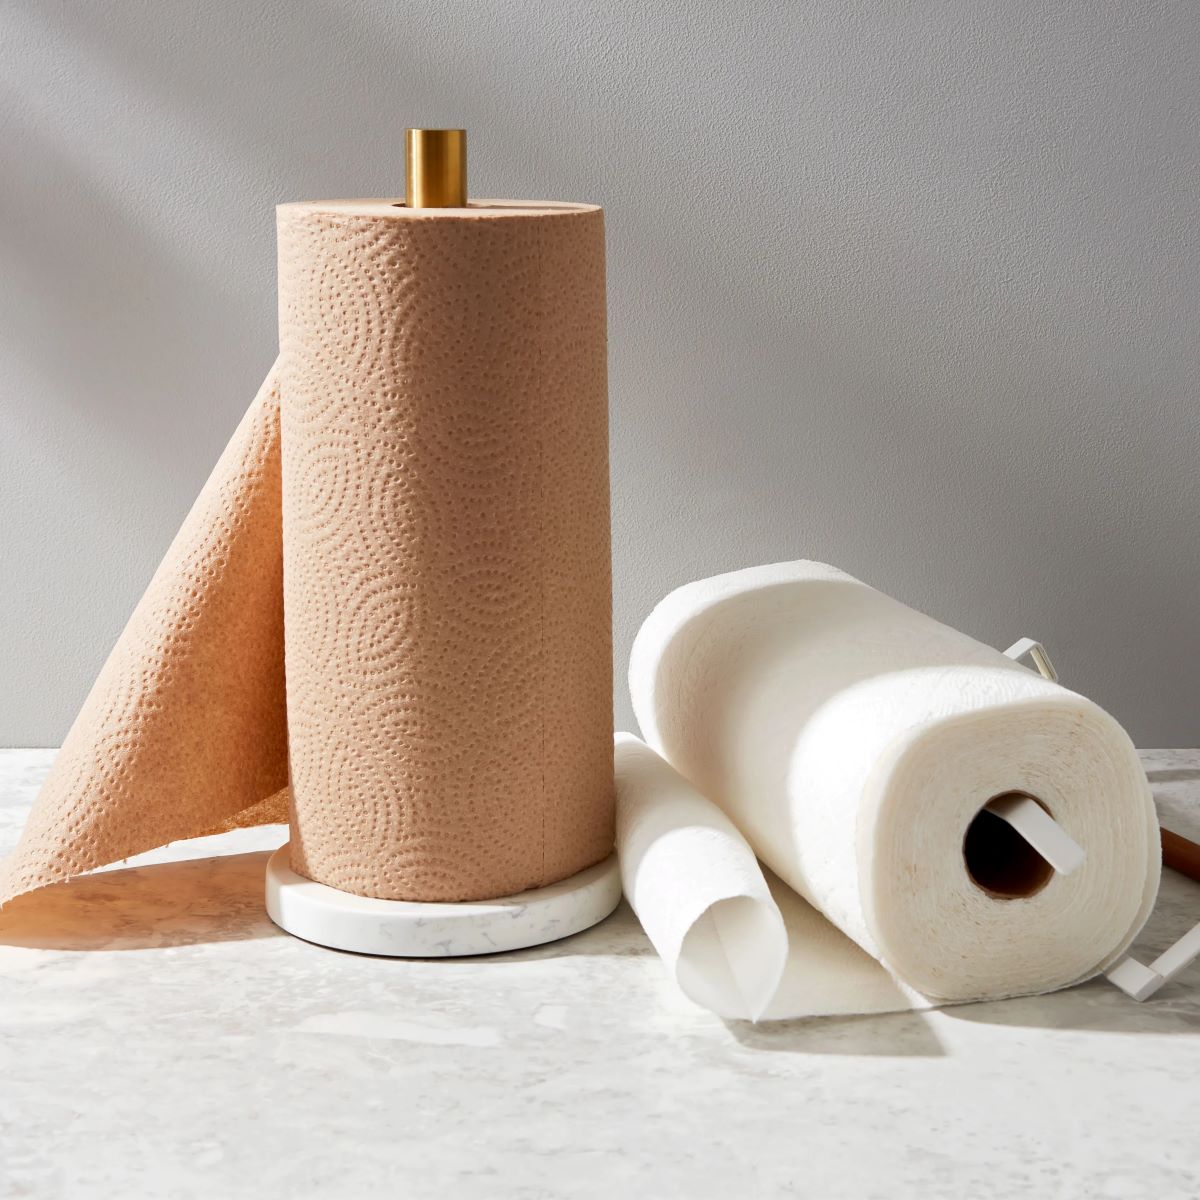 How To Hide Paper Towel Holder? - Tools for Kitchen & Bathroom  Hidden  kitchen, Kitchen storage solutions, Kitchen paper towel